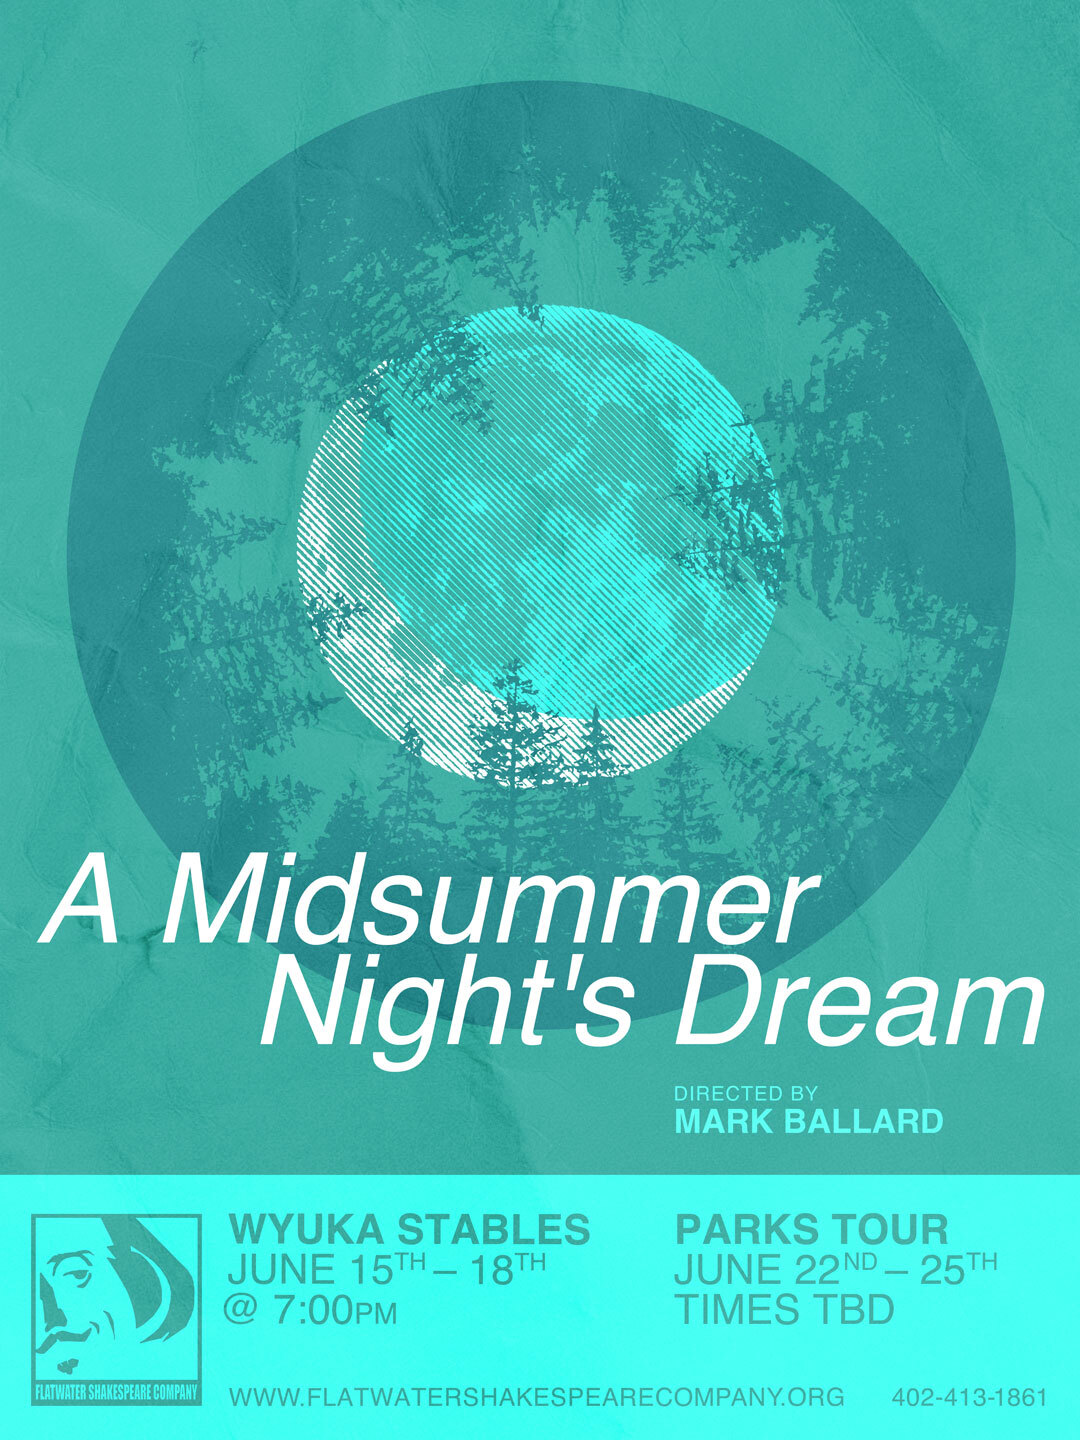 6/16 ADU - ADULT: Friday. June 16, 2023 | 7:00 p.m. - 9:00 p.m. CST | Wyuka Stables (A Midsummer Night's Dream)